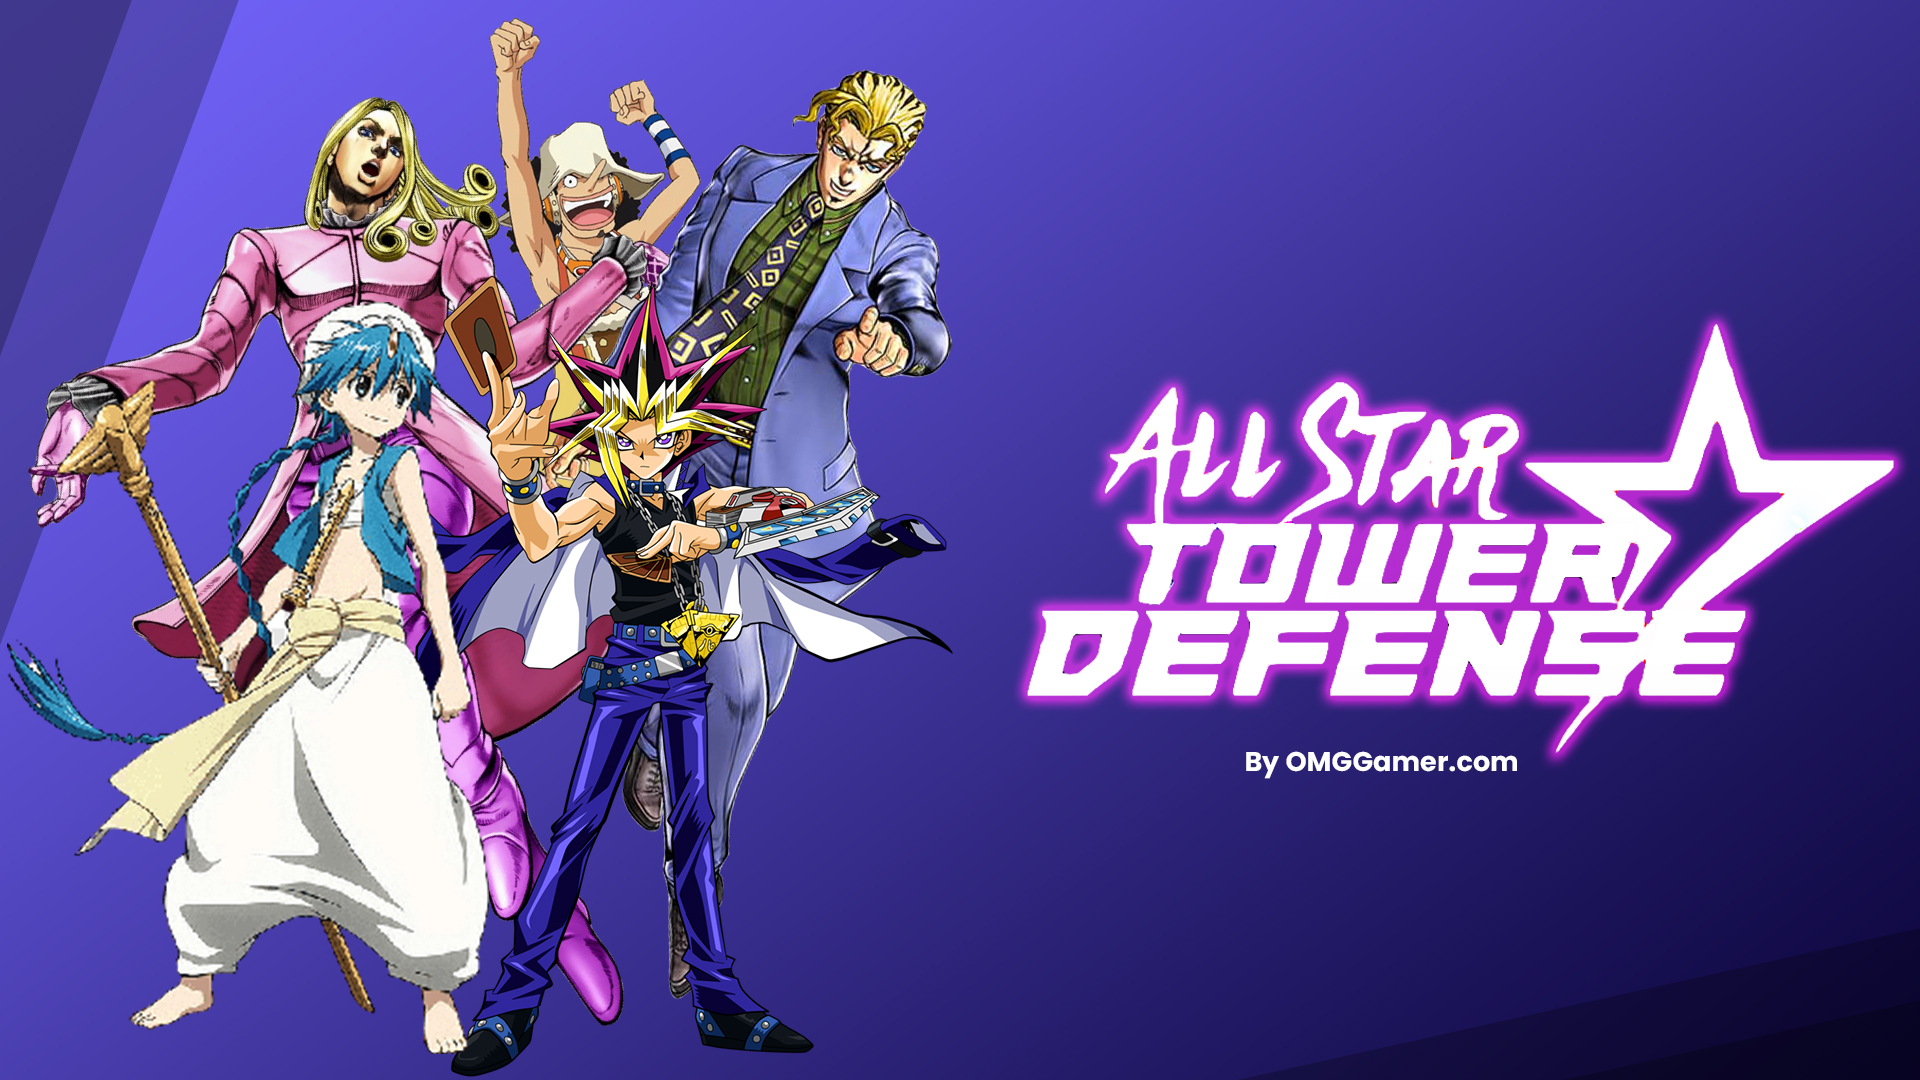 New 6 Star Tier List, All Star Tower Defense